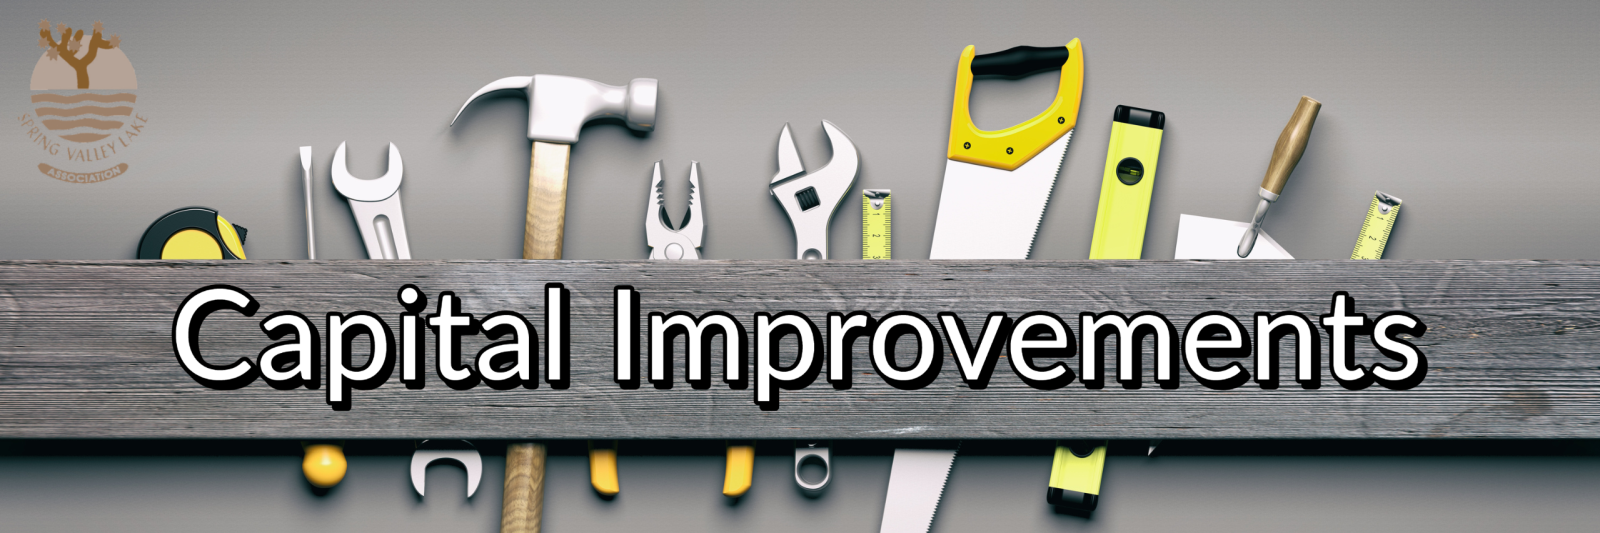 Capital Improvements Banner: Displaying tools